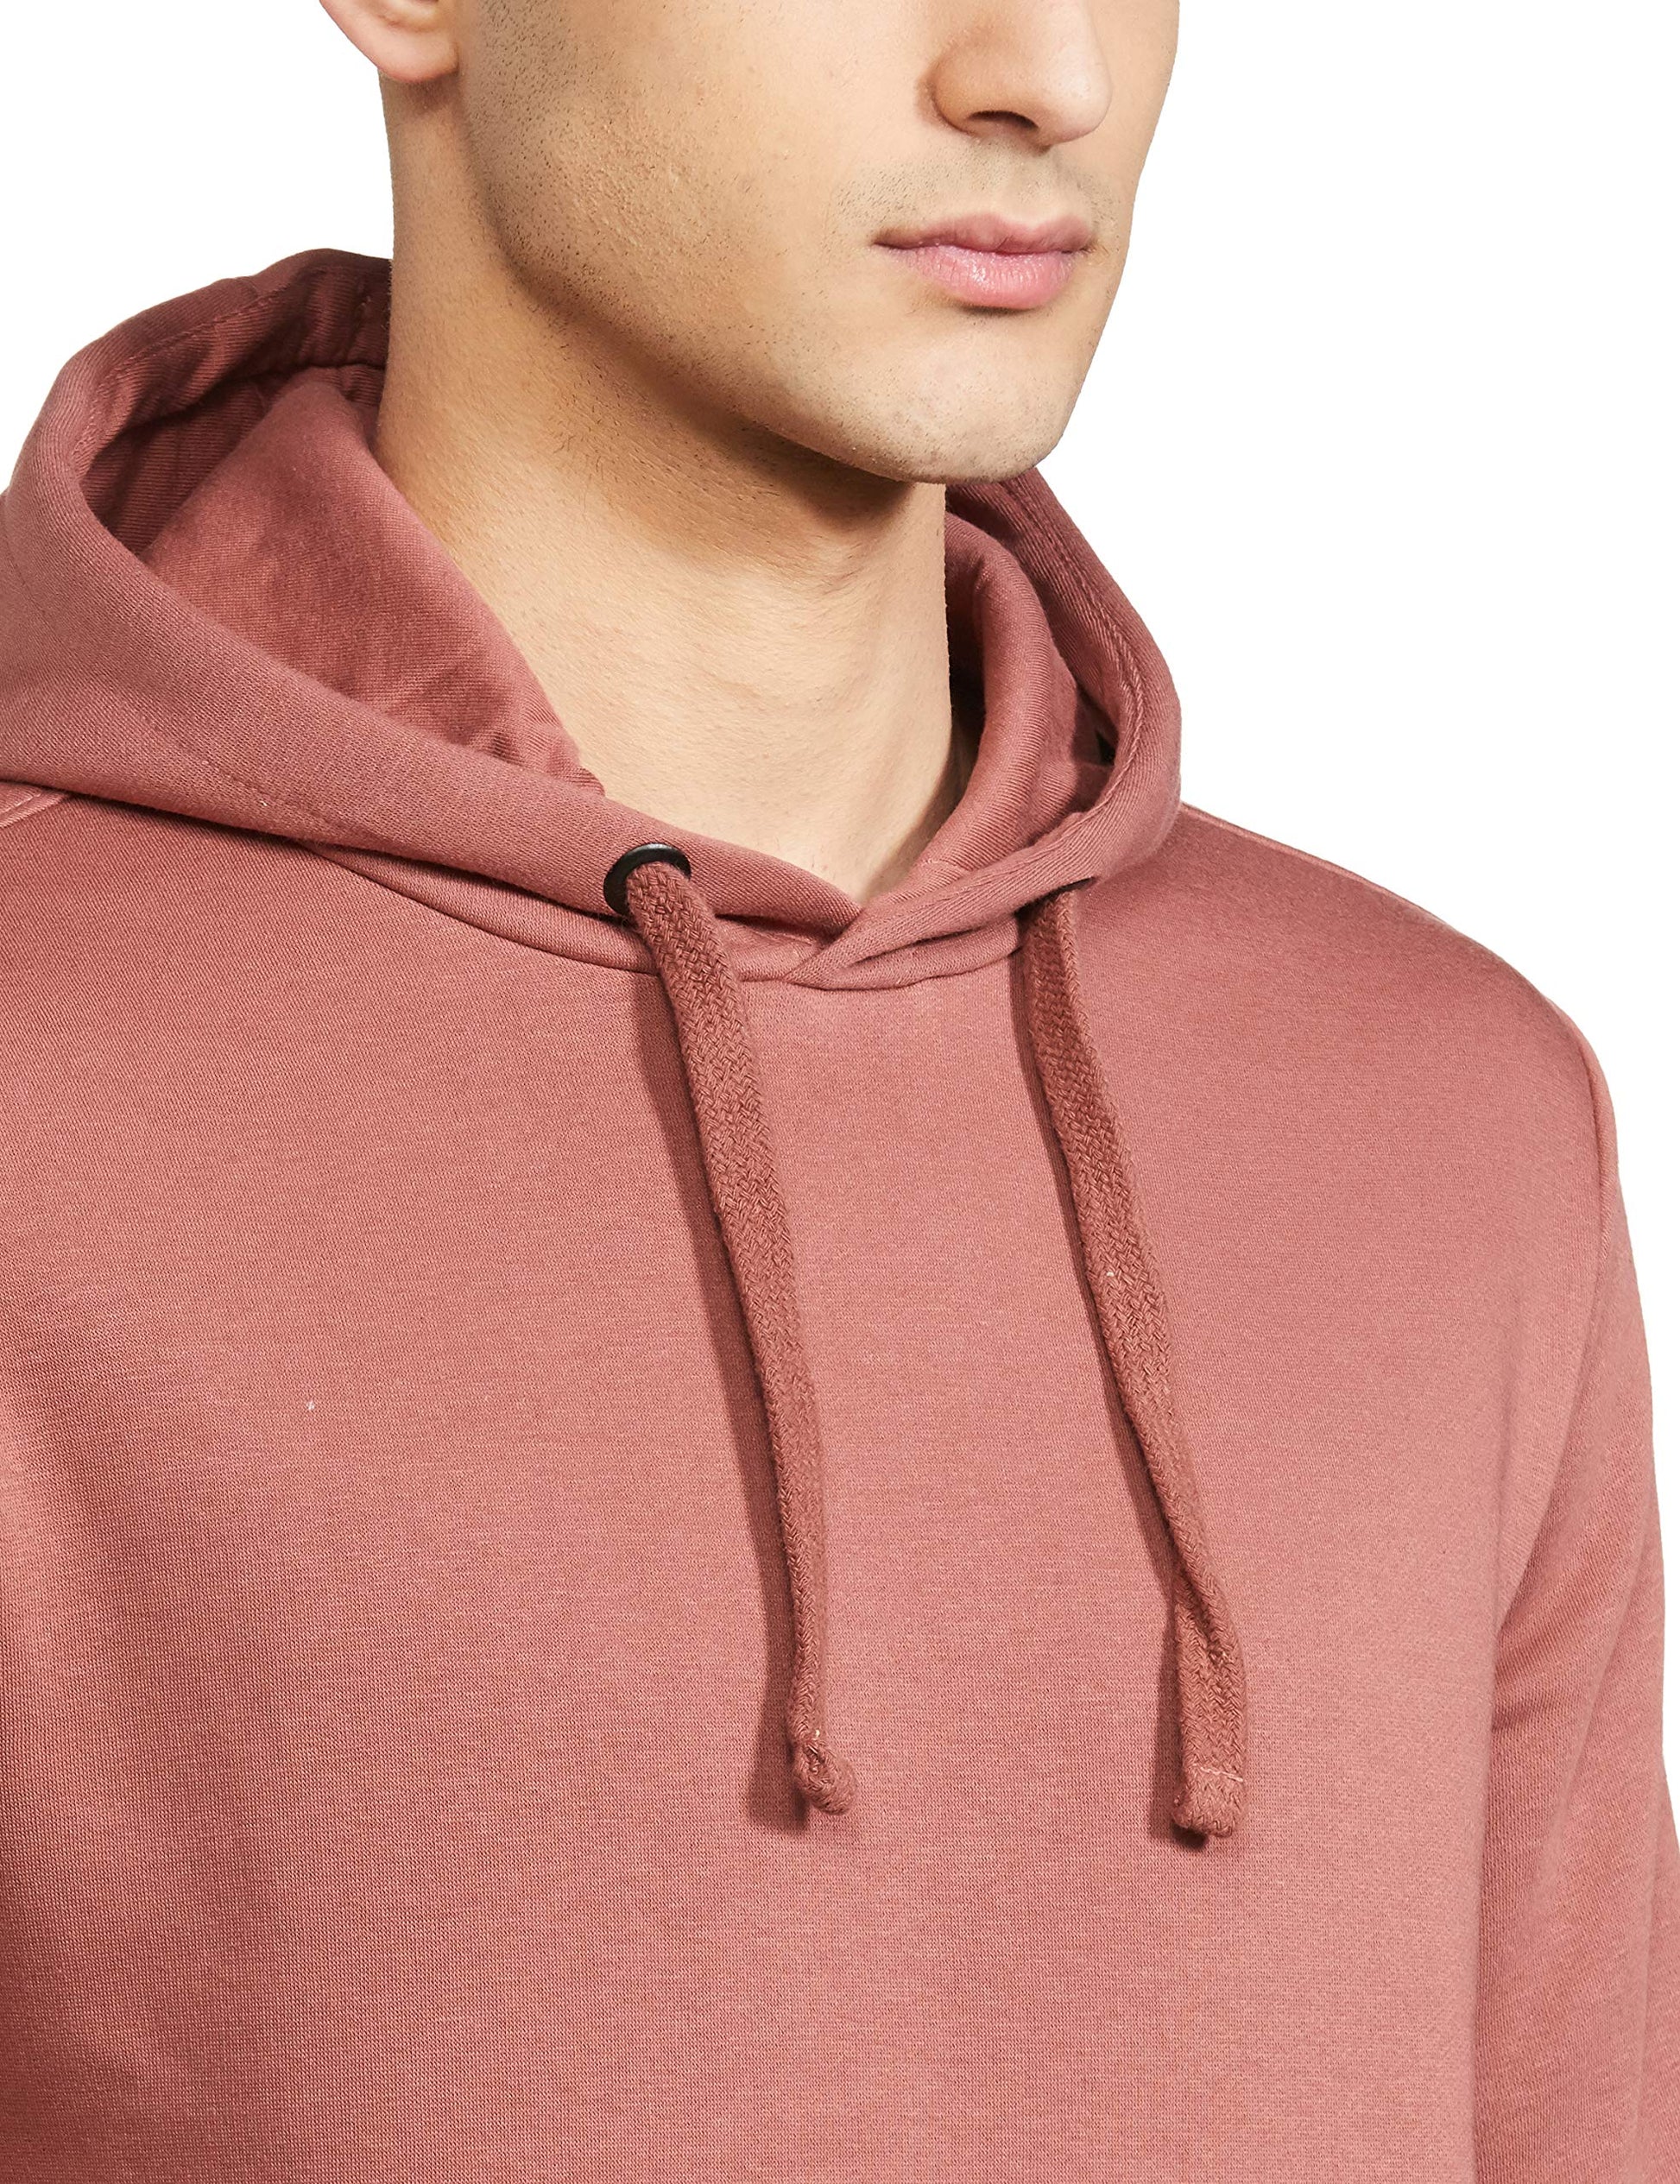 Amazon Brand - Symbol Men's Cotton Blend Hooded Neck Sweatshirt (AW18MNSSW02D_Copper Brown_Large_Copper Brown_L) 